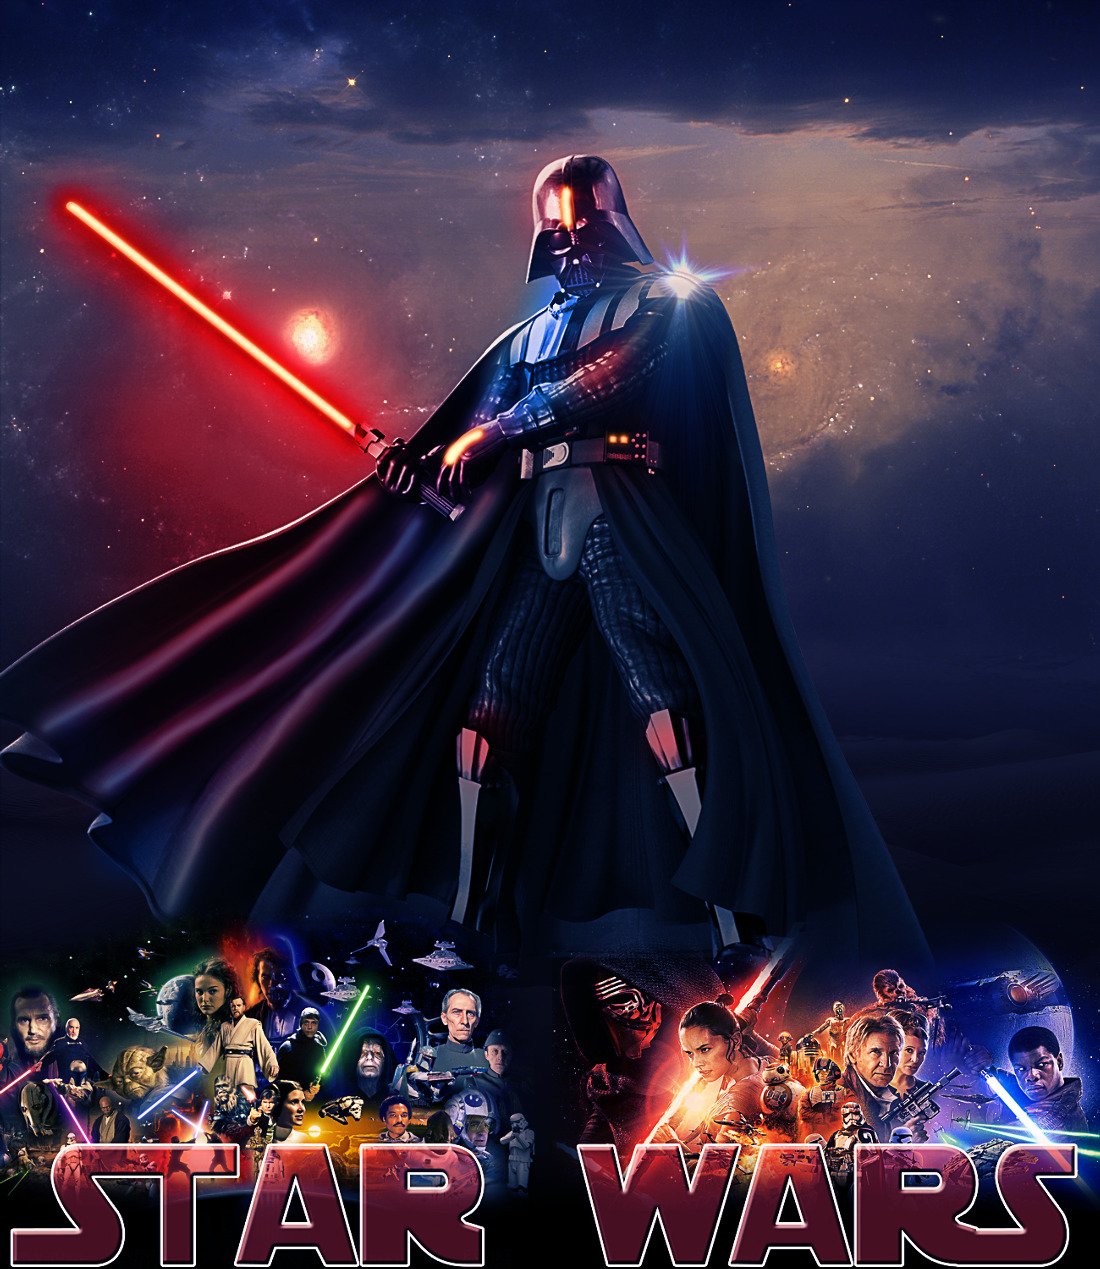 Star Wars Movie Poster Photoshop Tutorial Photoshop Tutorial Psddude